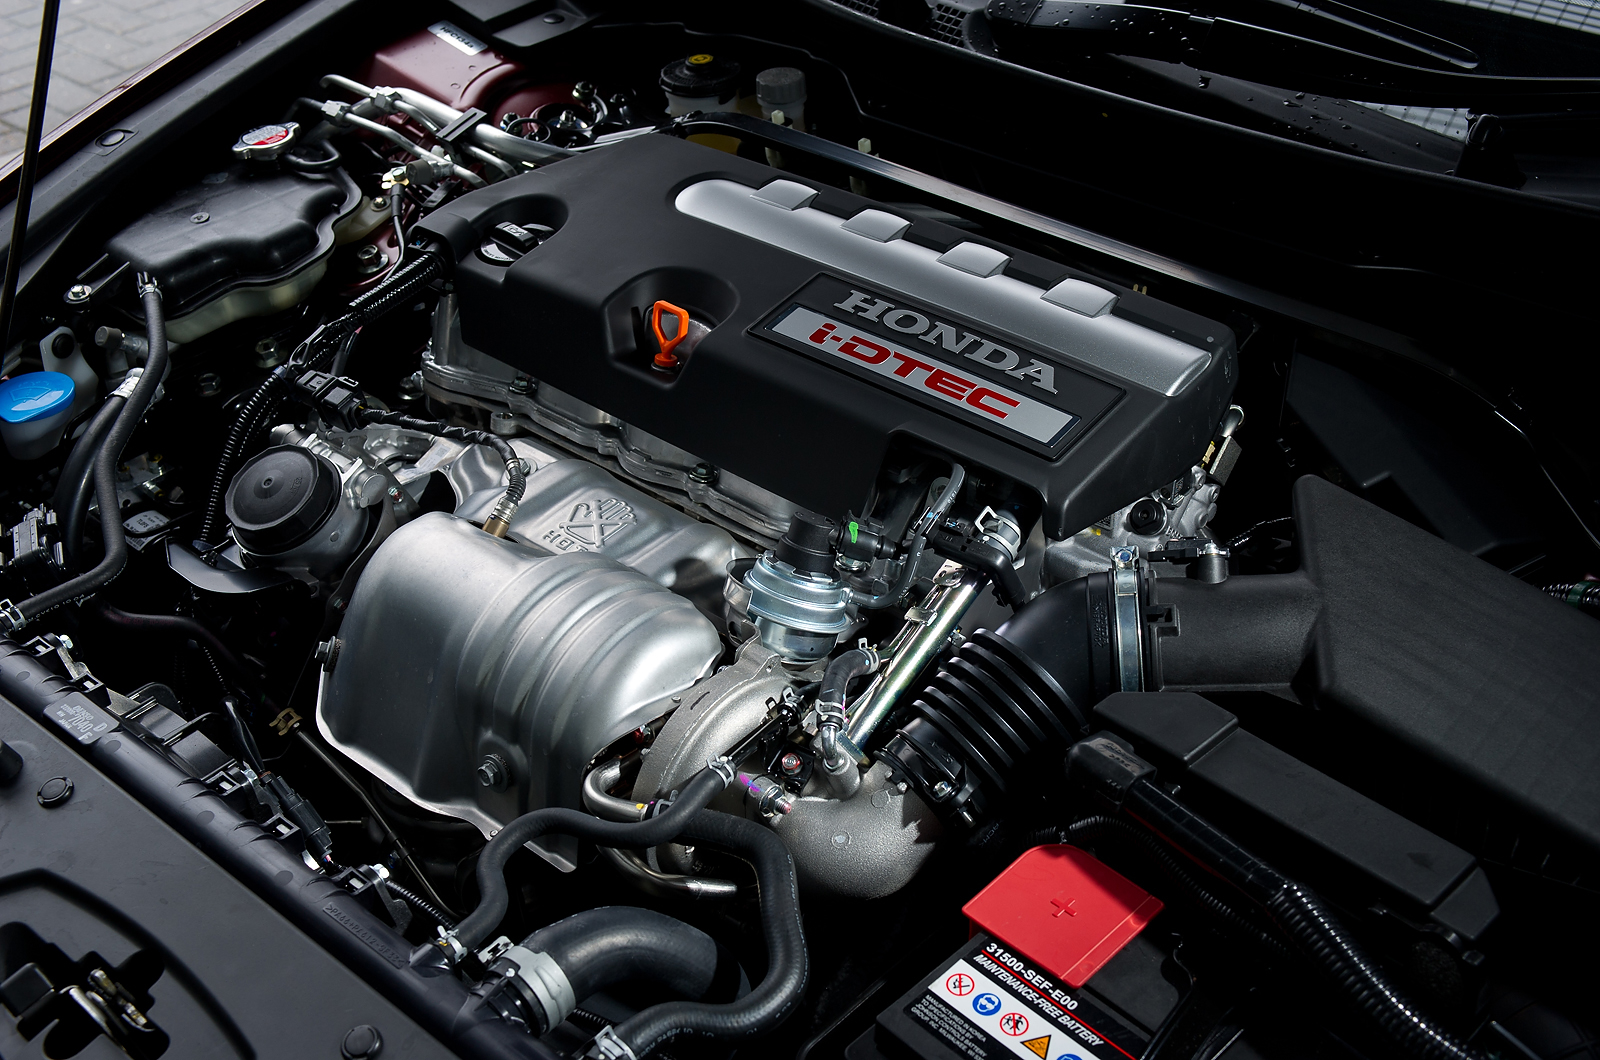 Honda Accord engine bay